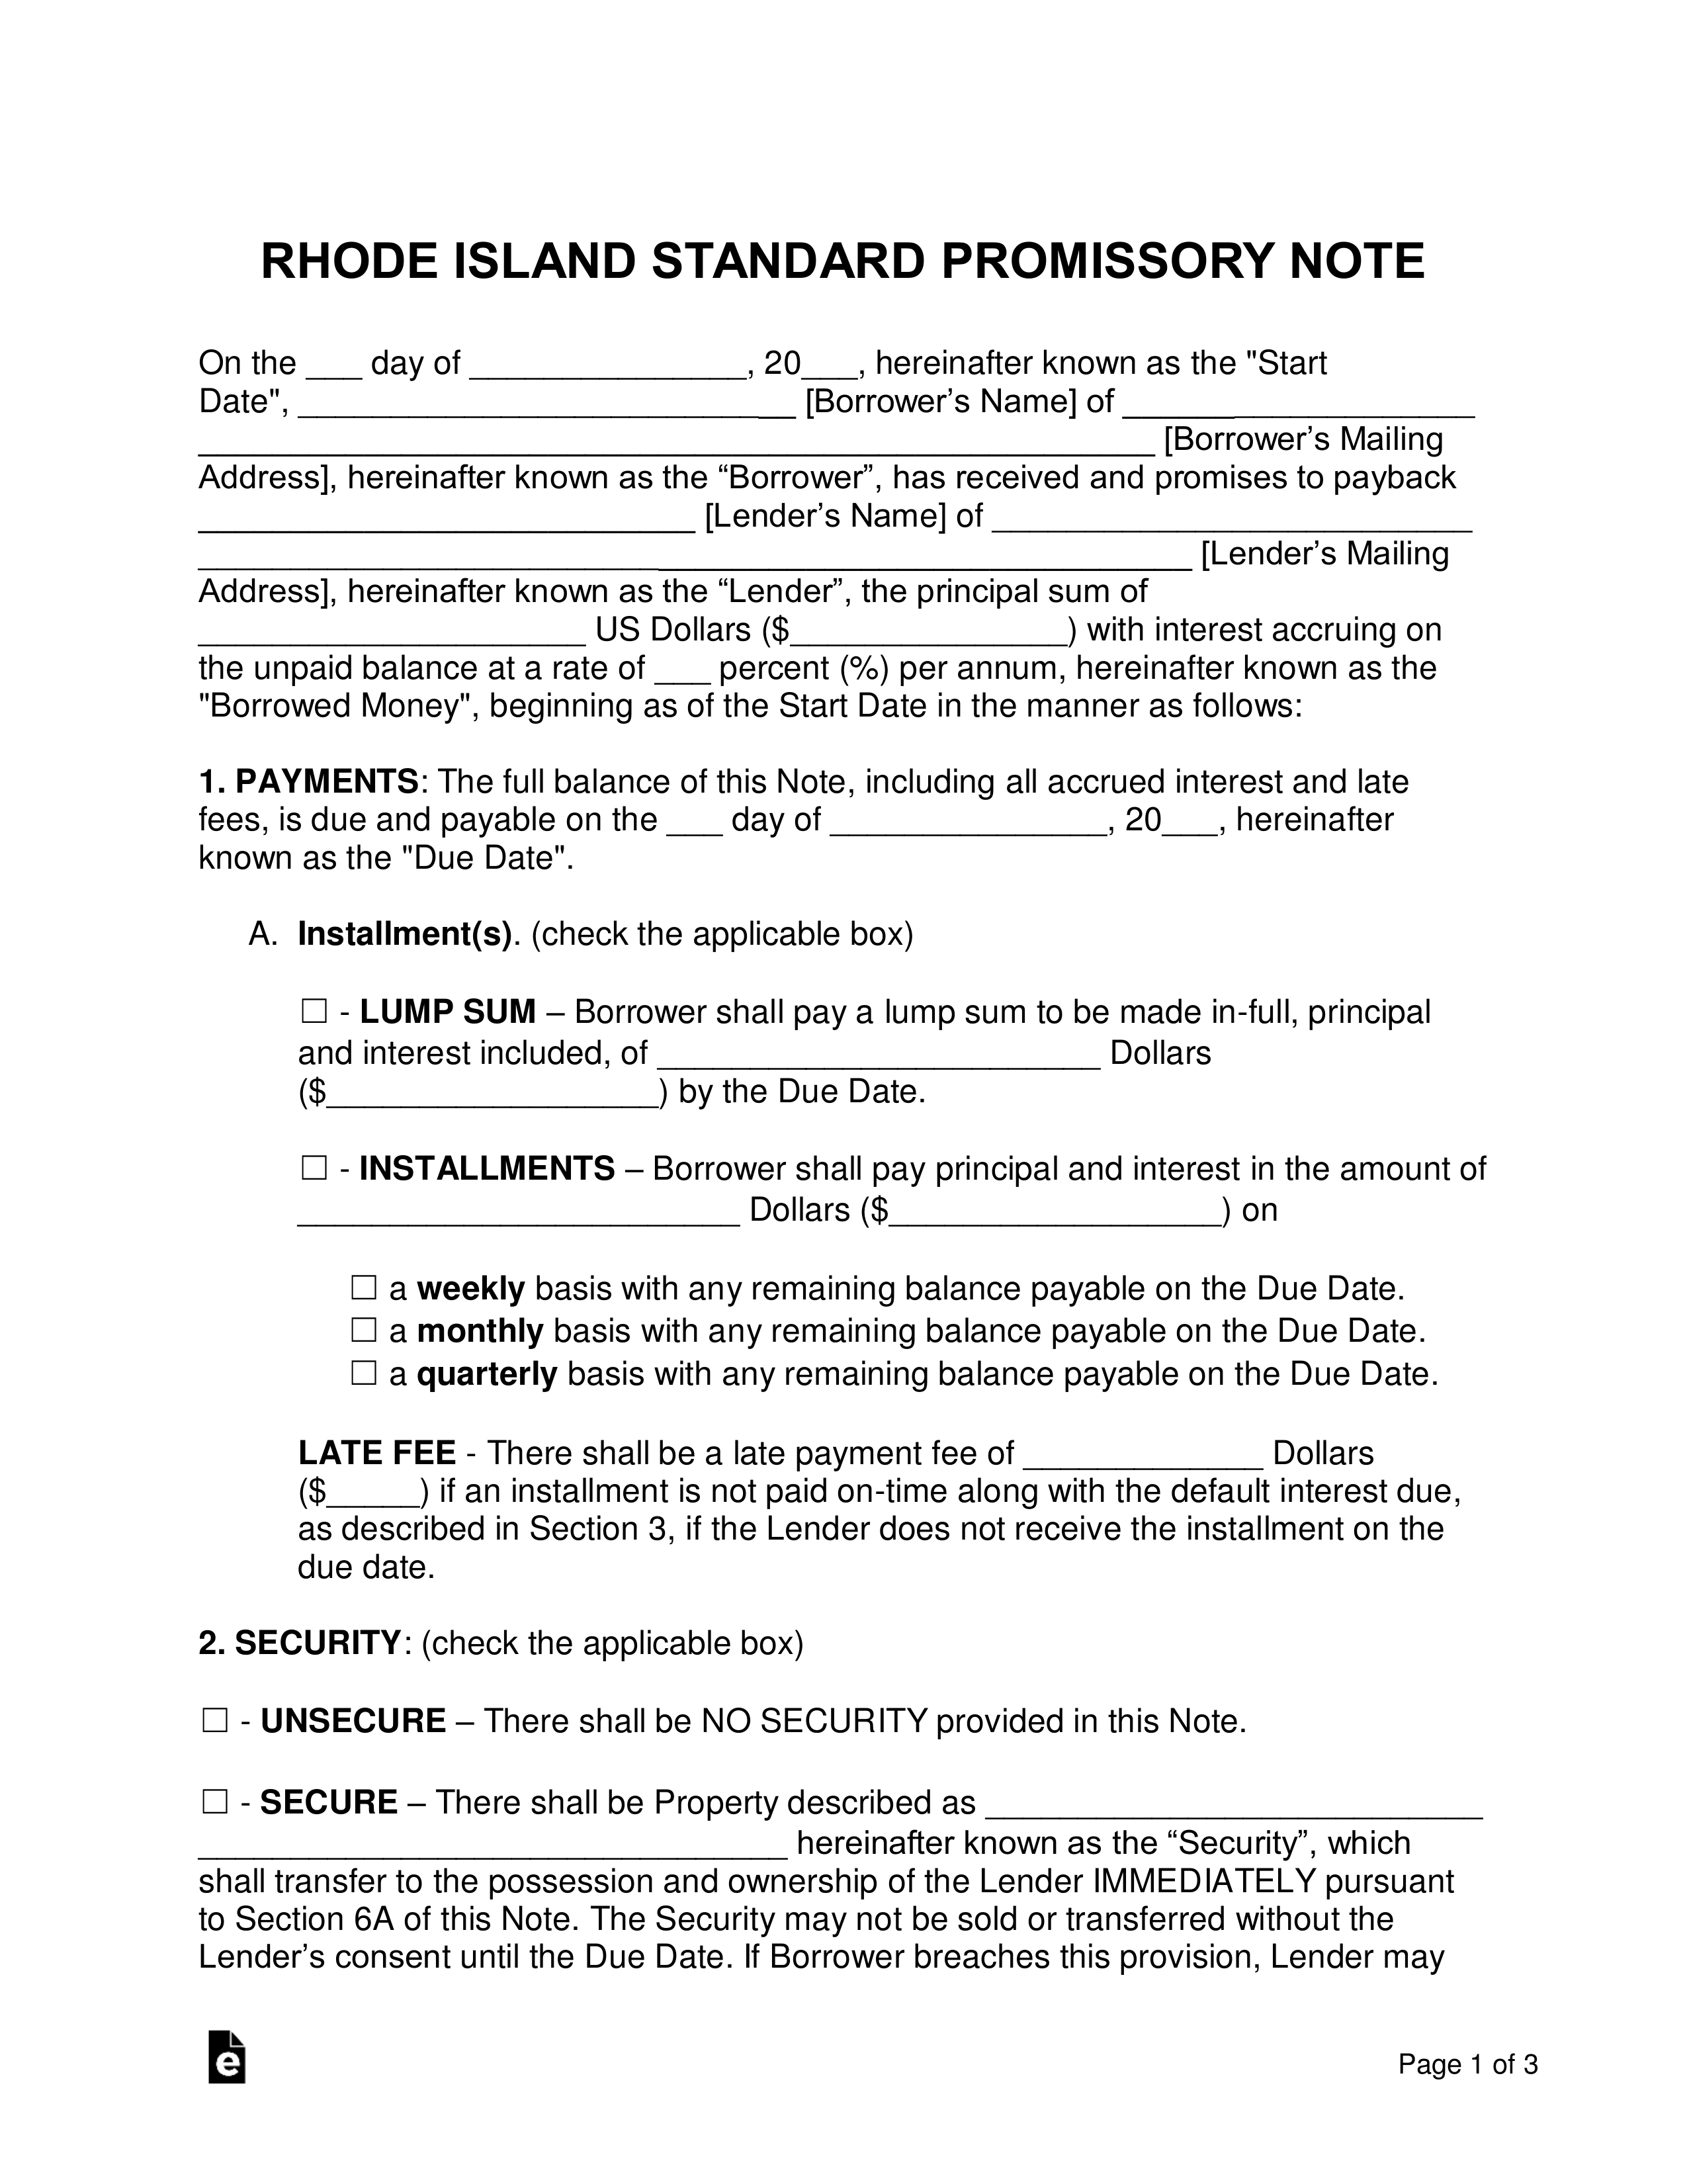 Rhode Island Promissory Note Templates (2)